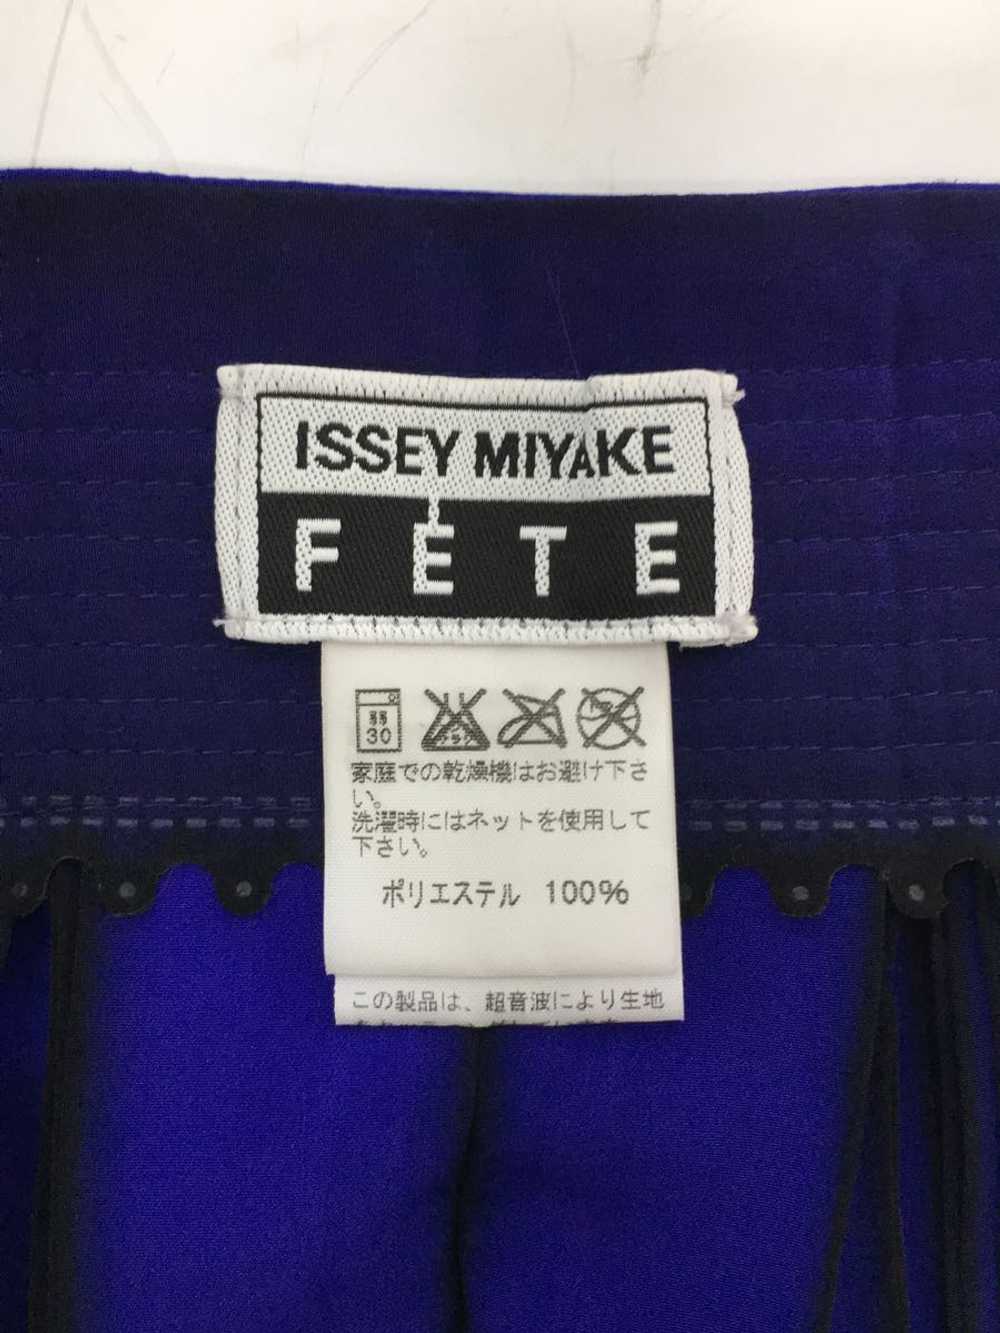 Used Issey Miyake Fete Skirt/--/Polyester/Blu Wear - image 4